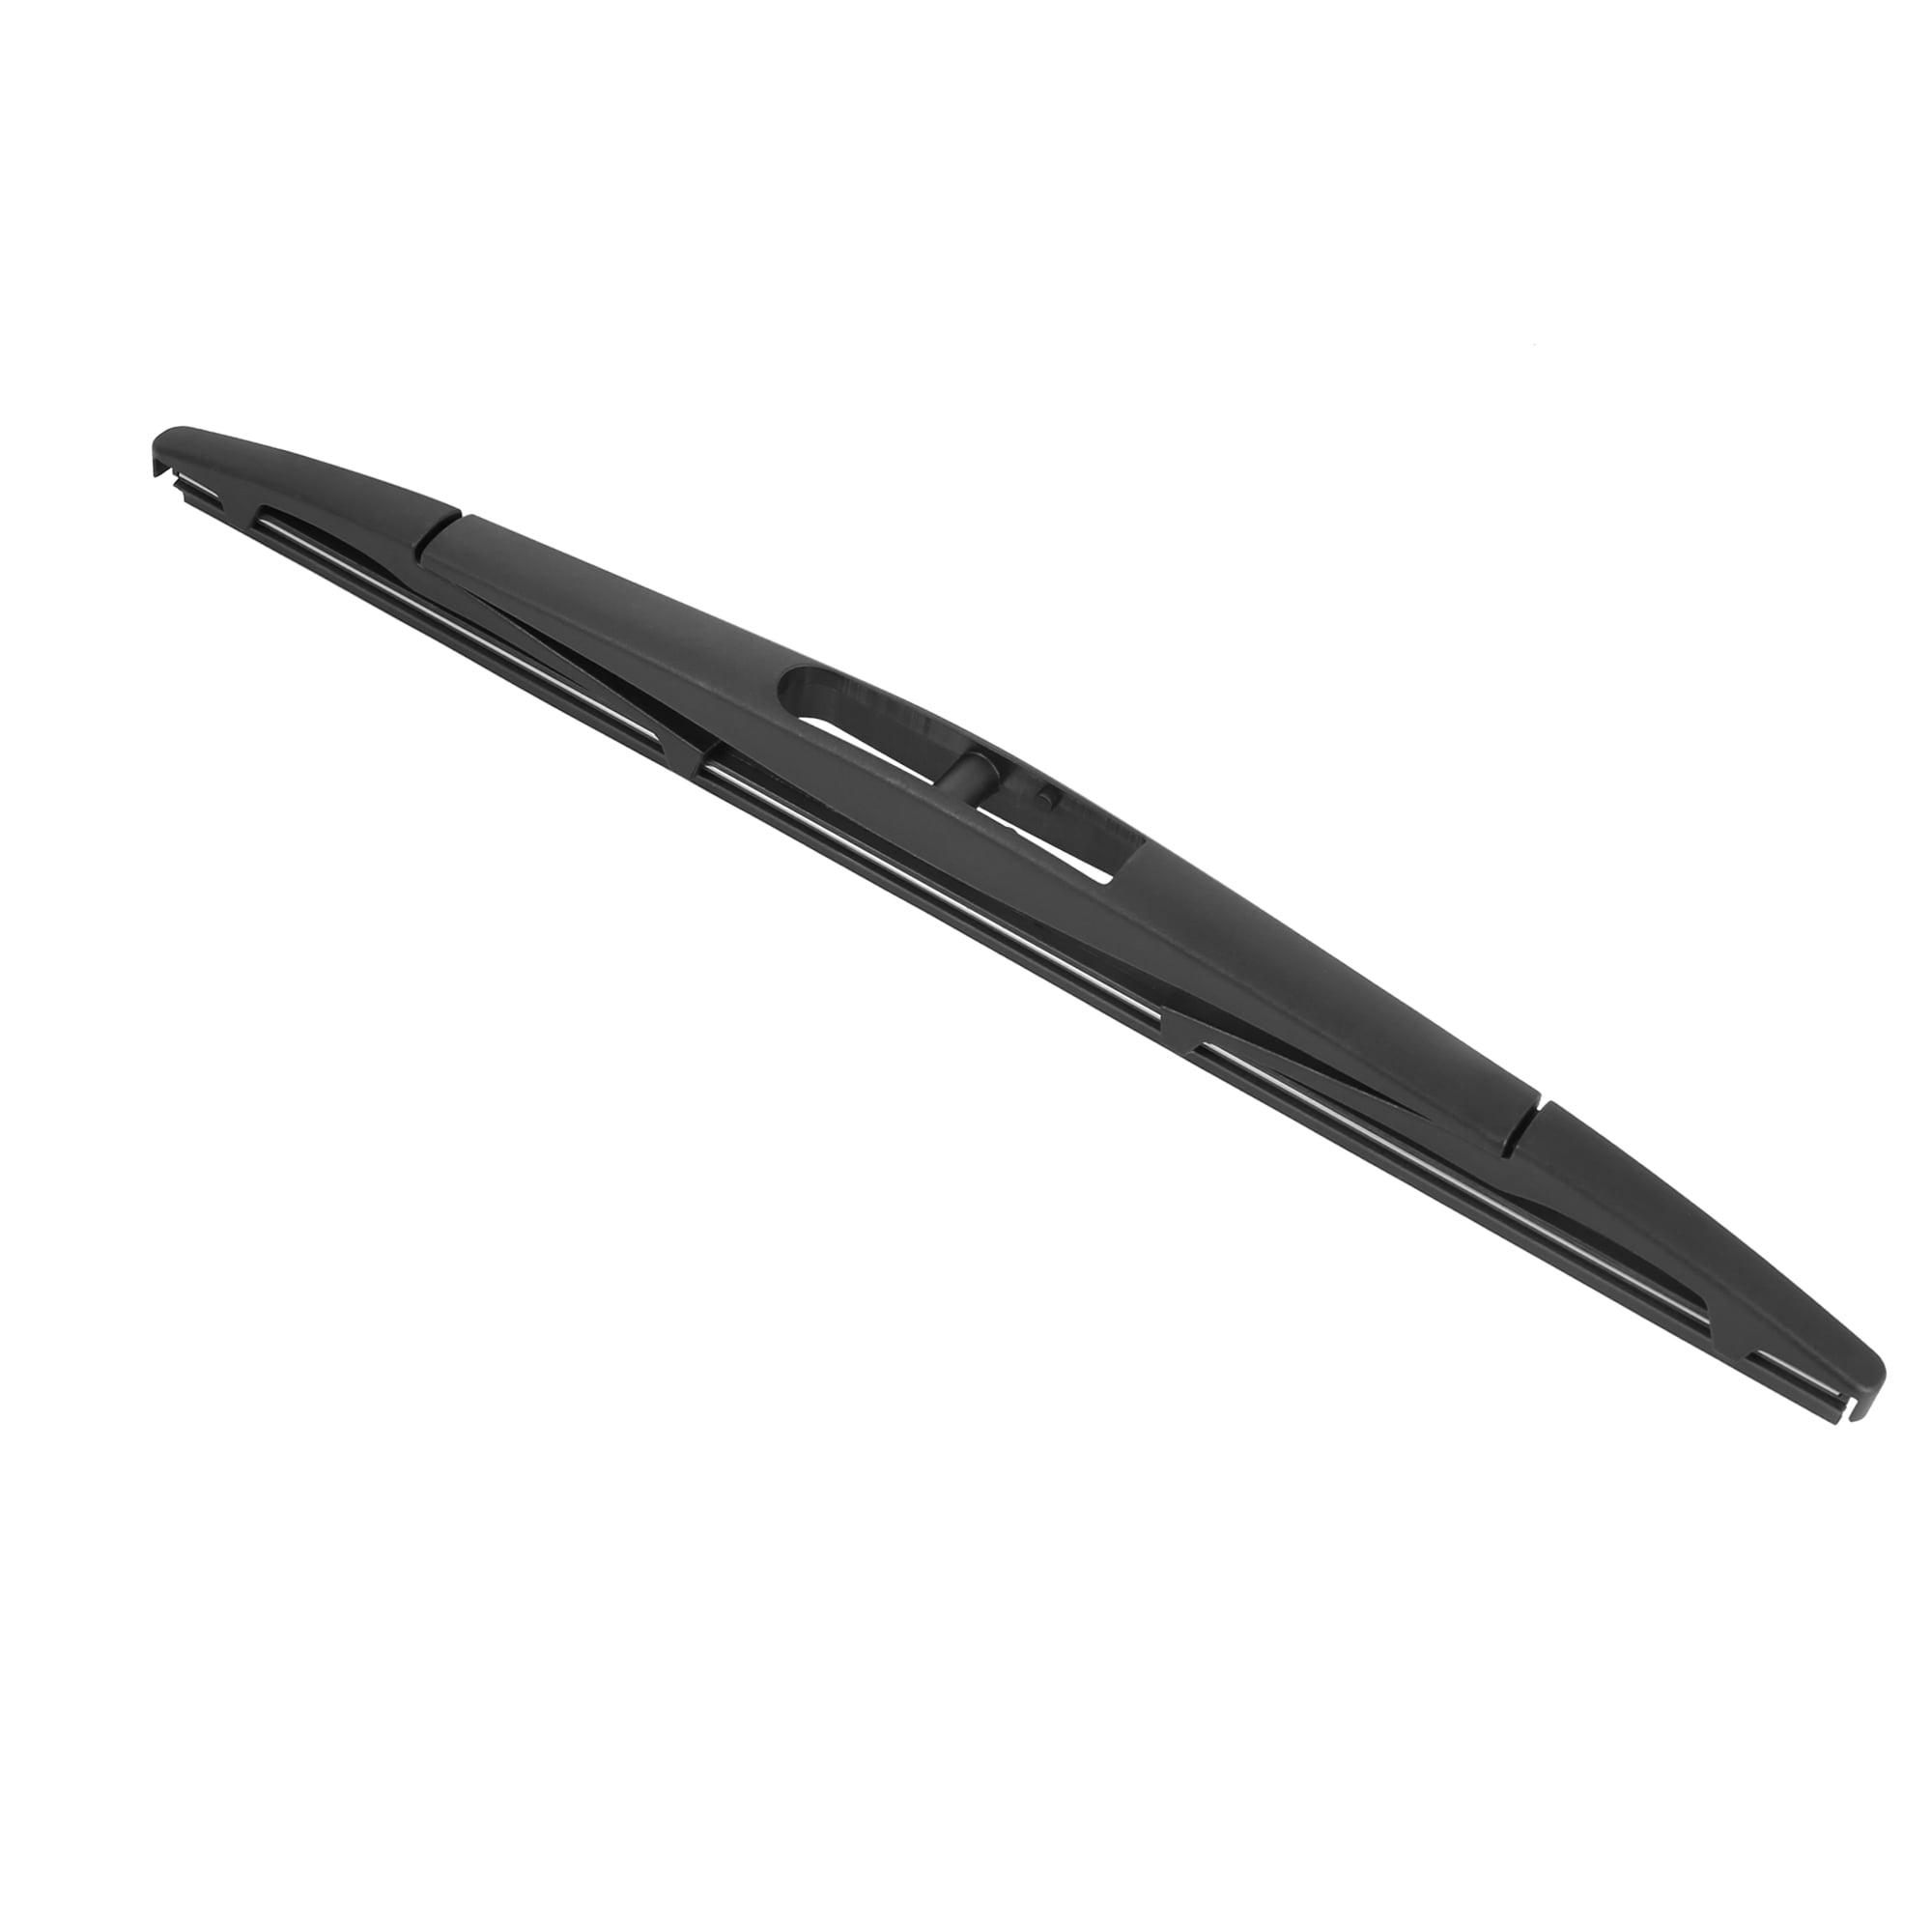 300mm Rear Windshield Wiper Blade for 2013-2018 Honda Civic - Walmart.com - Walmart.com 2018 Honda Civic Hatchback Windshield Wiper Size